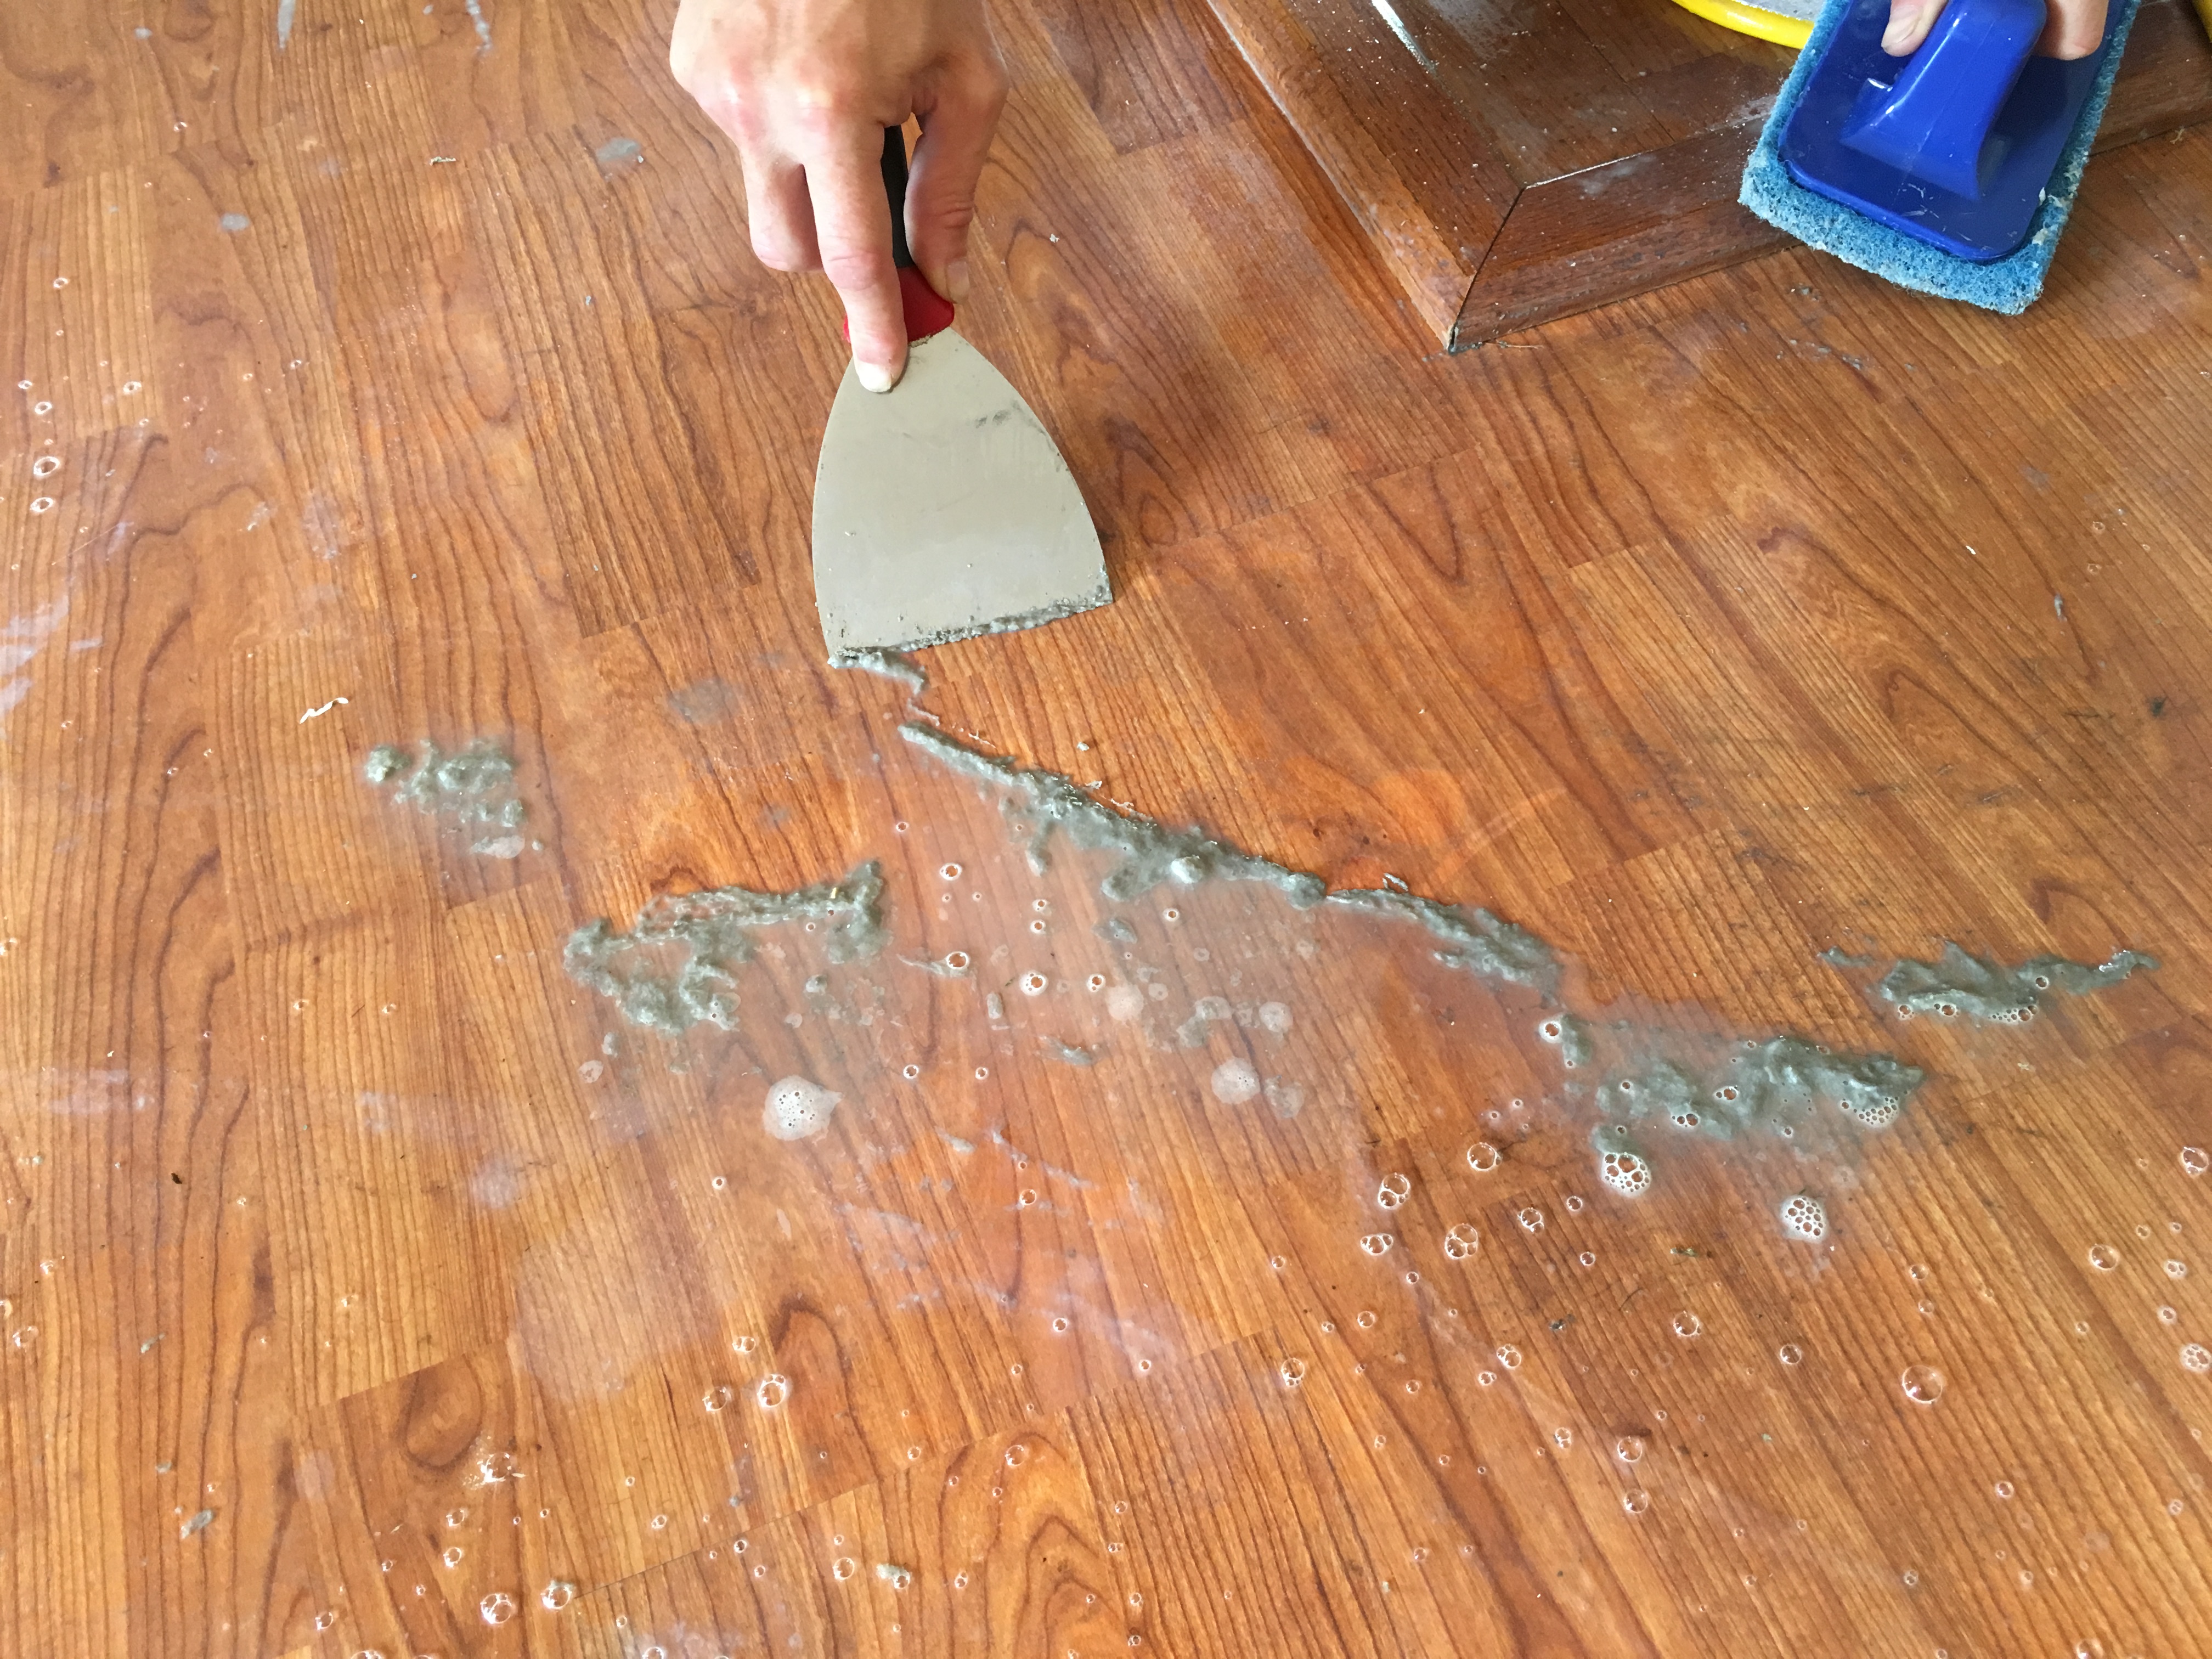 Fort Wayne S Floor Cleaner, How To Get Wax Buildup Off Laminate Floors